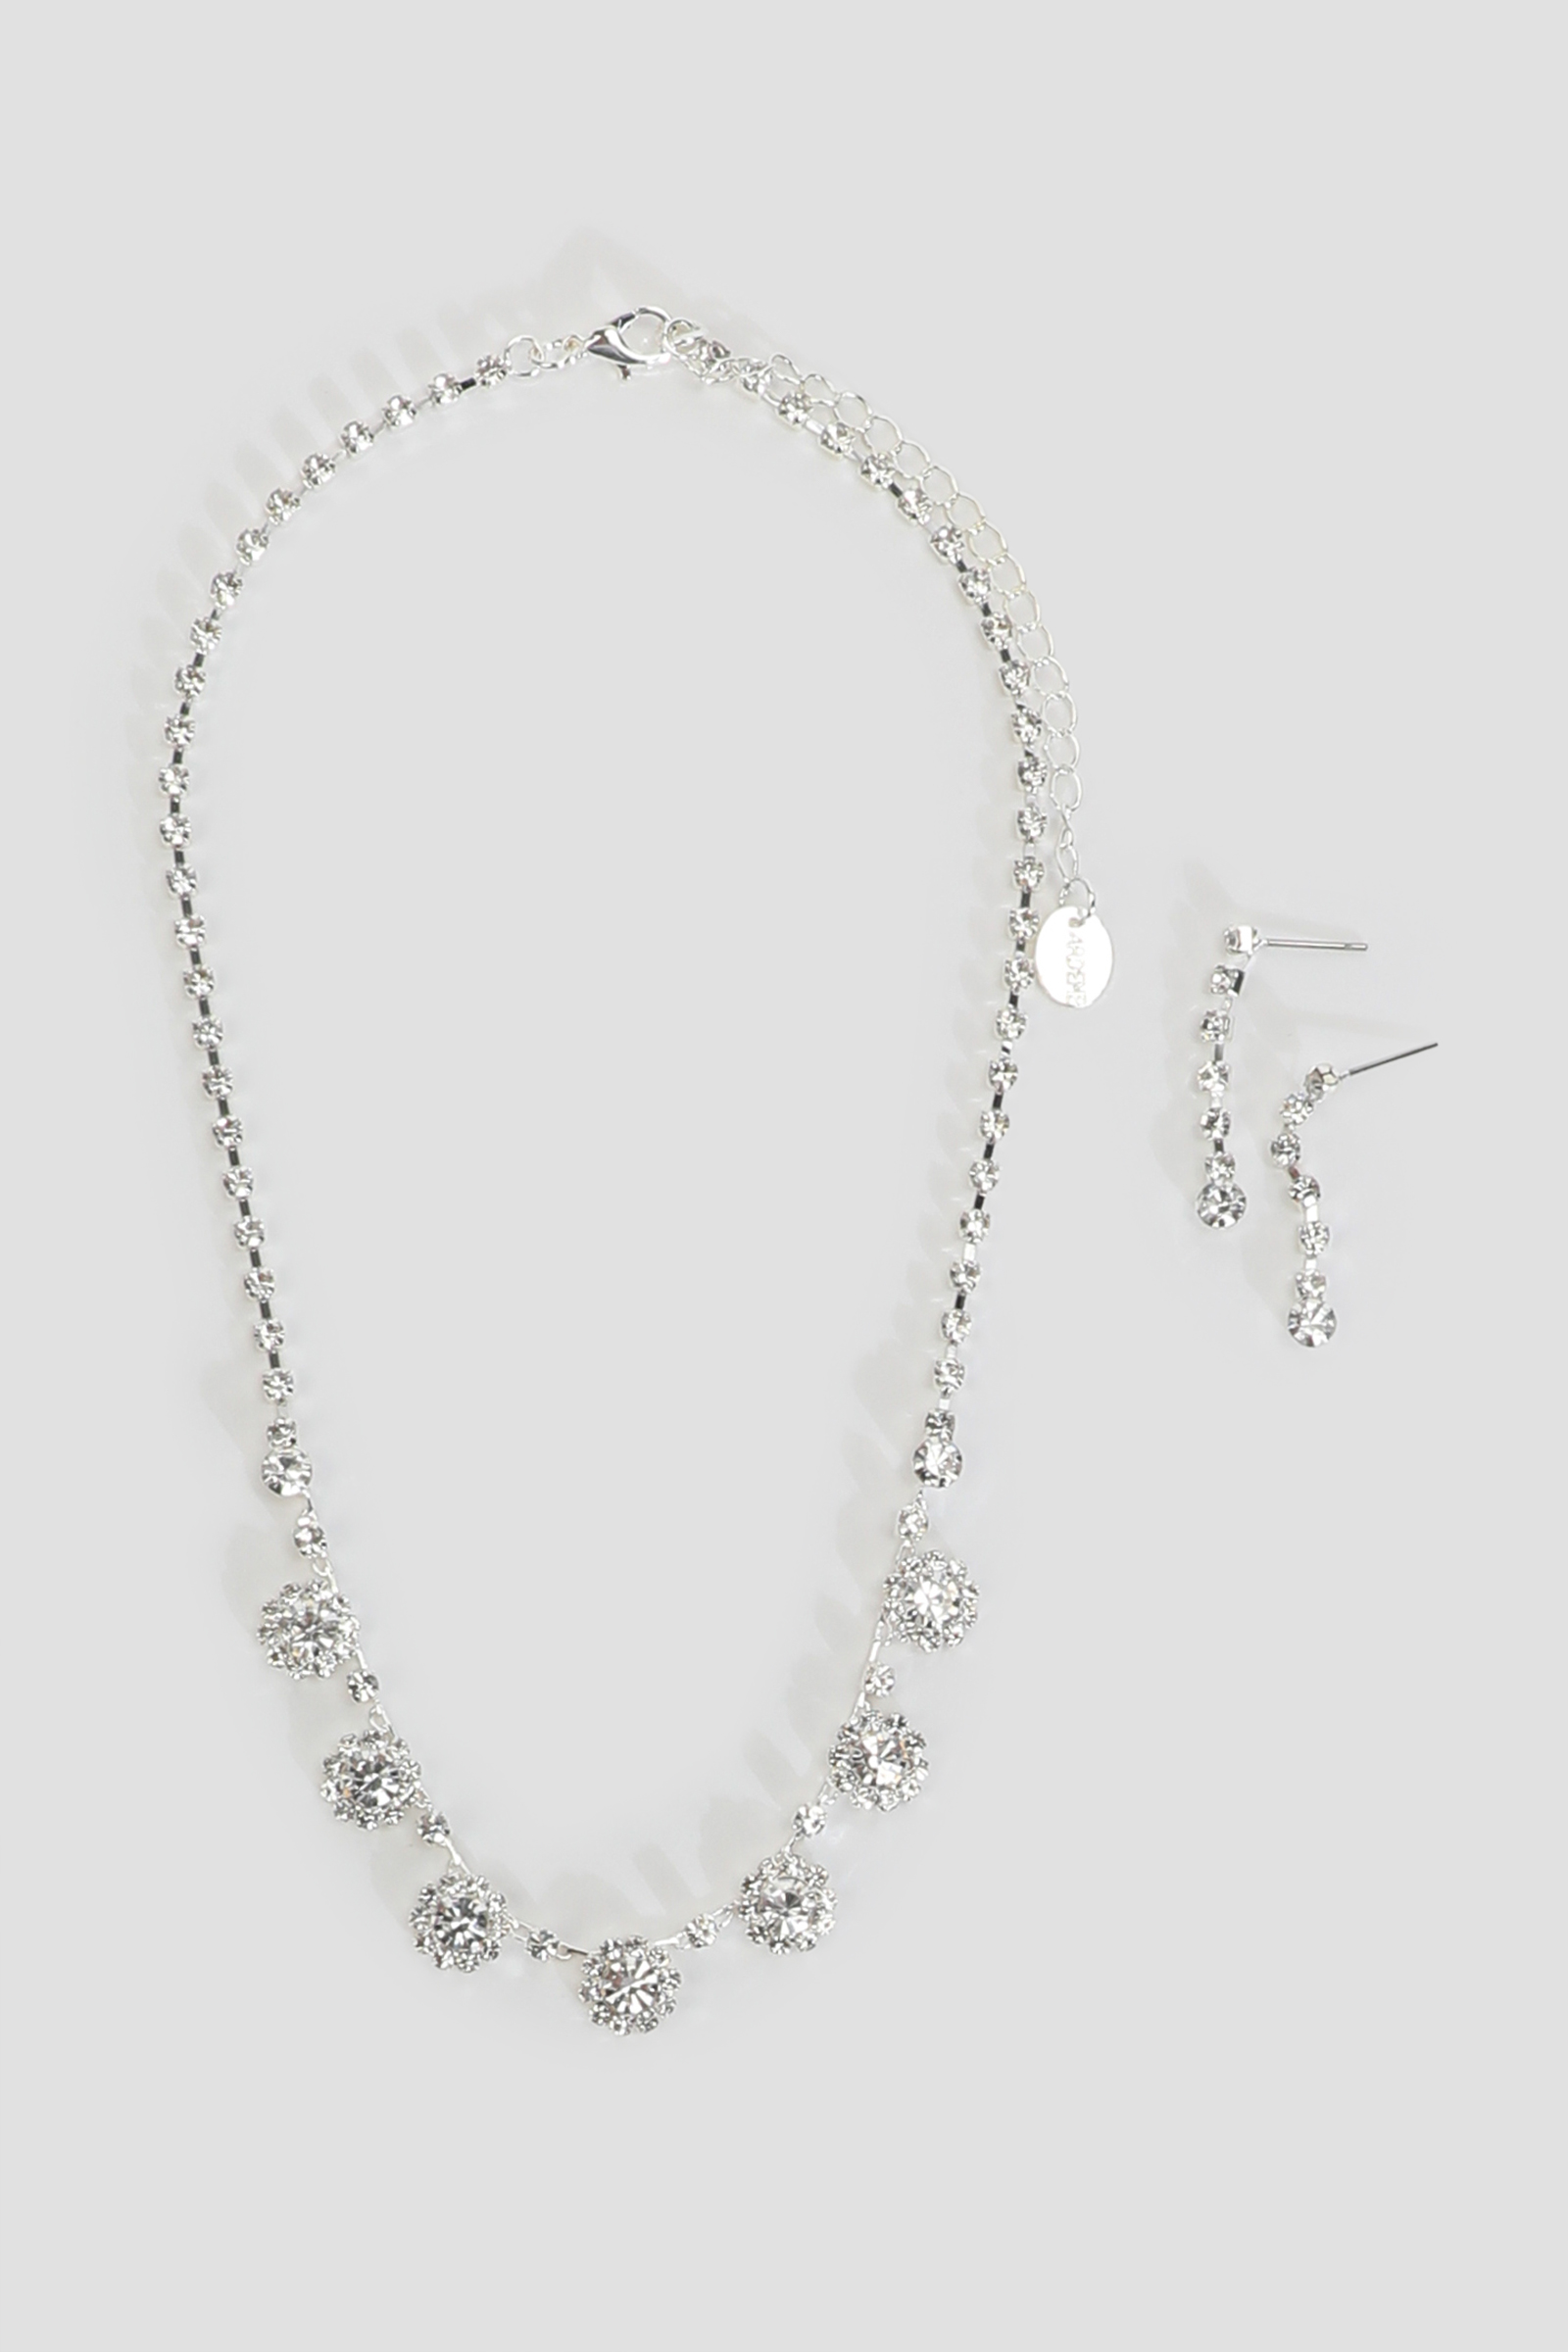 Ardene Floral Rhinestone Necklace & Earrings Set in Silver | Stainless Steel